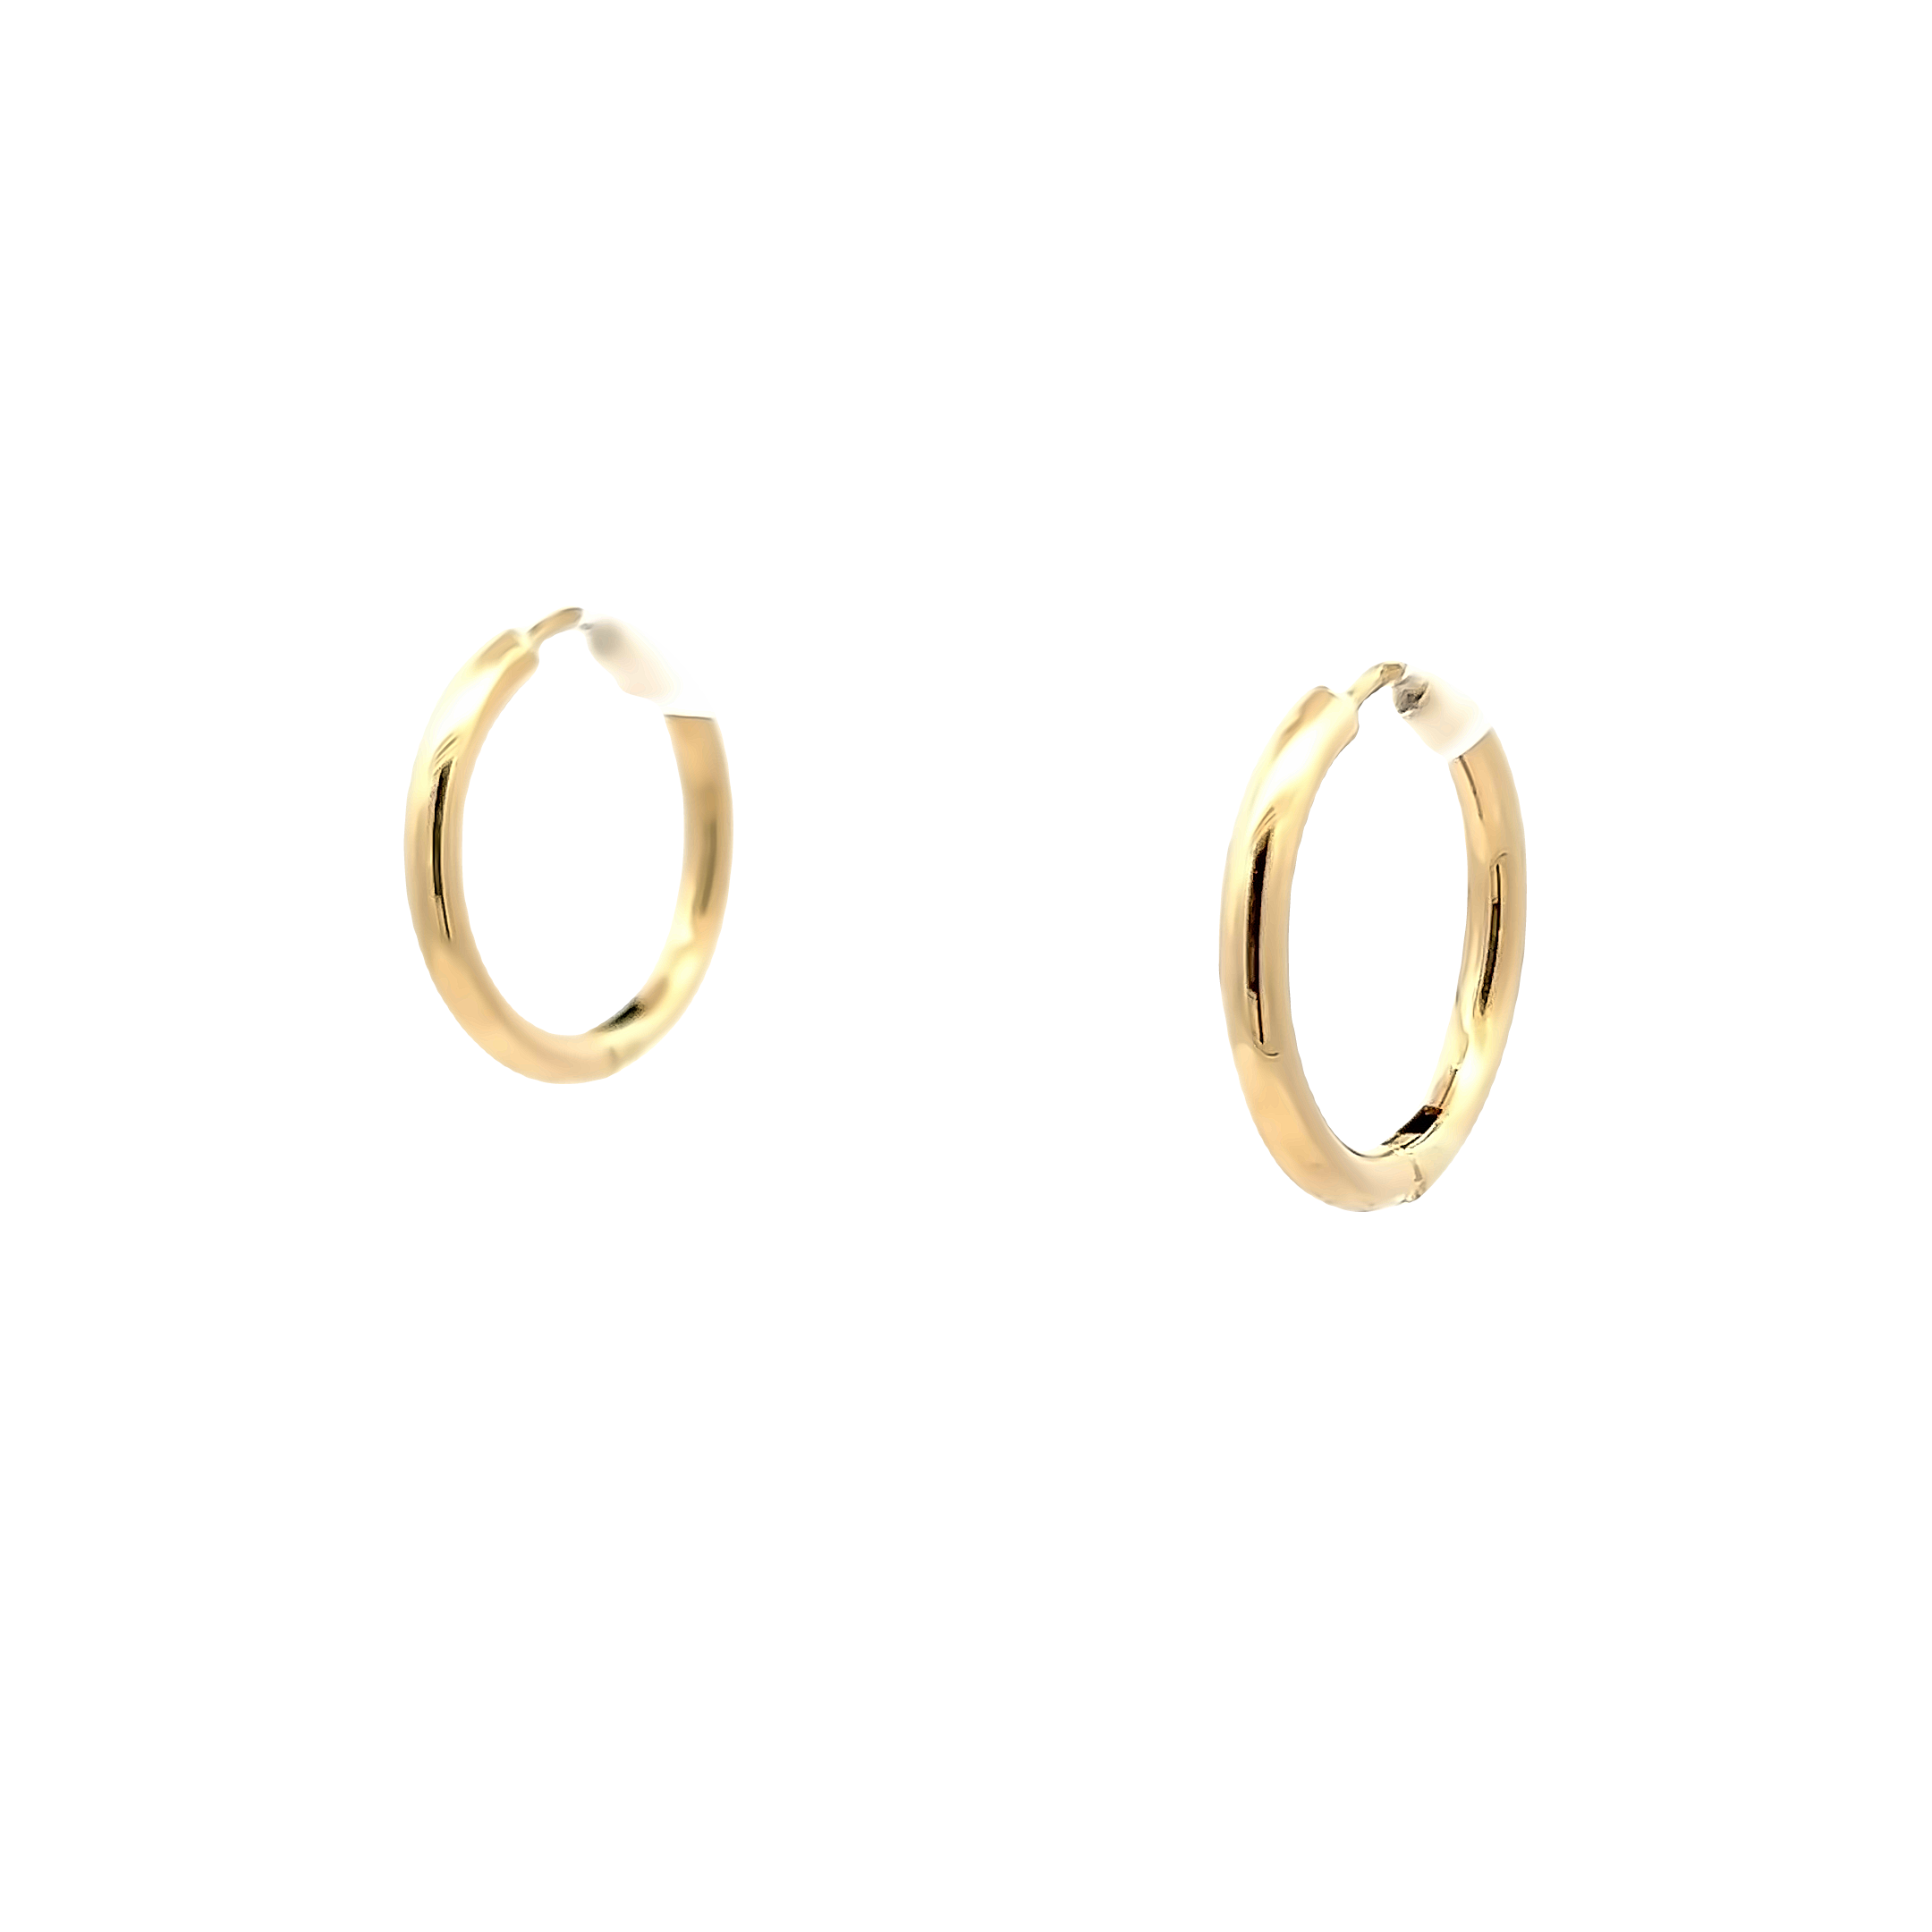 14 karat yellow gold 30 mm rounded hoop earrings.